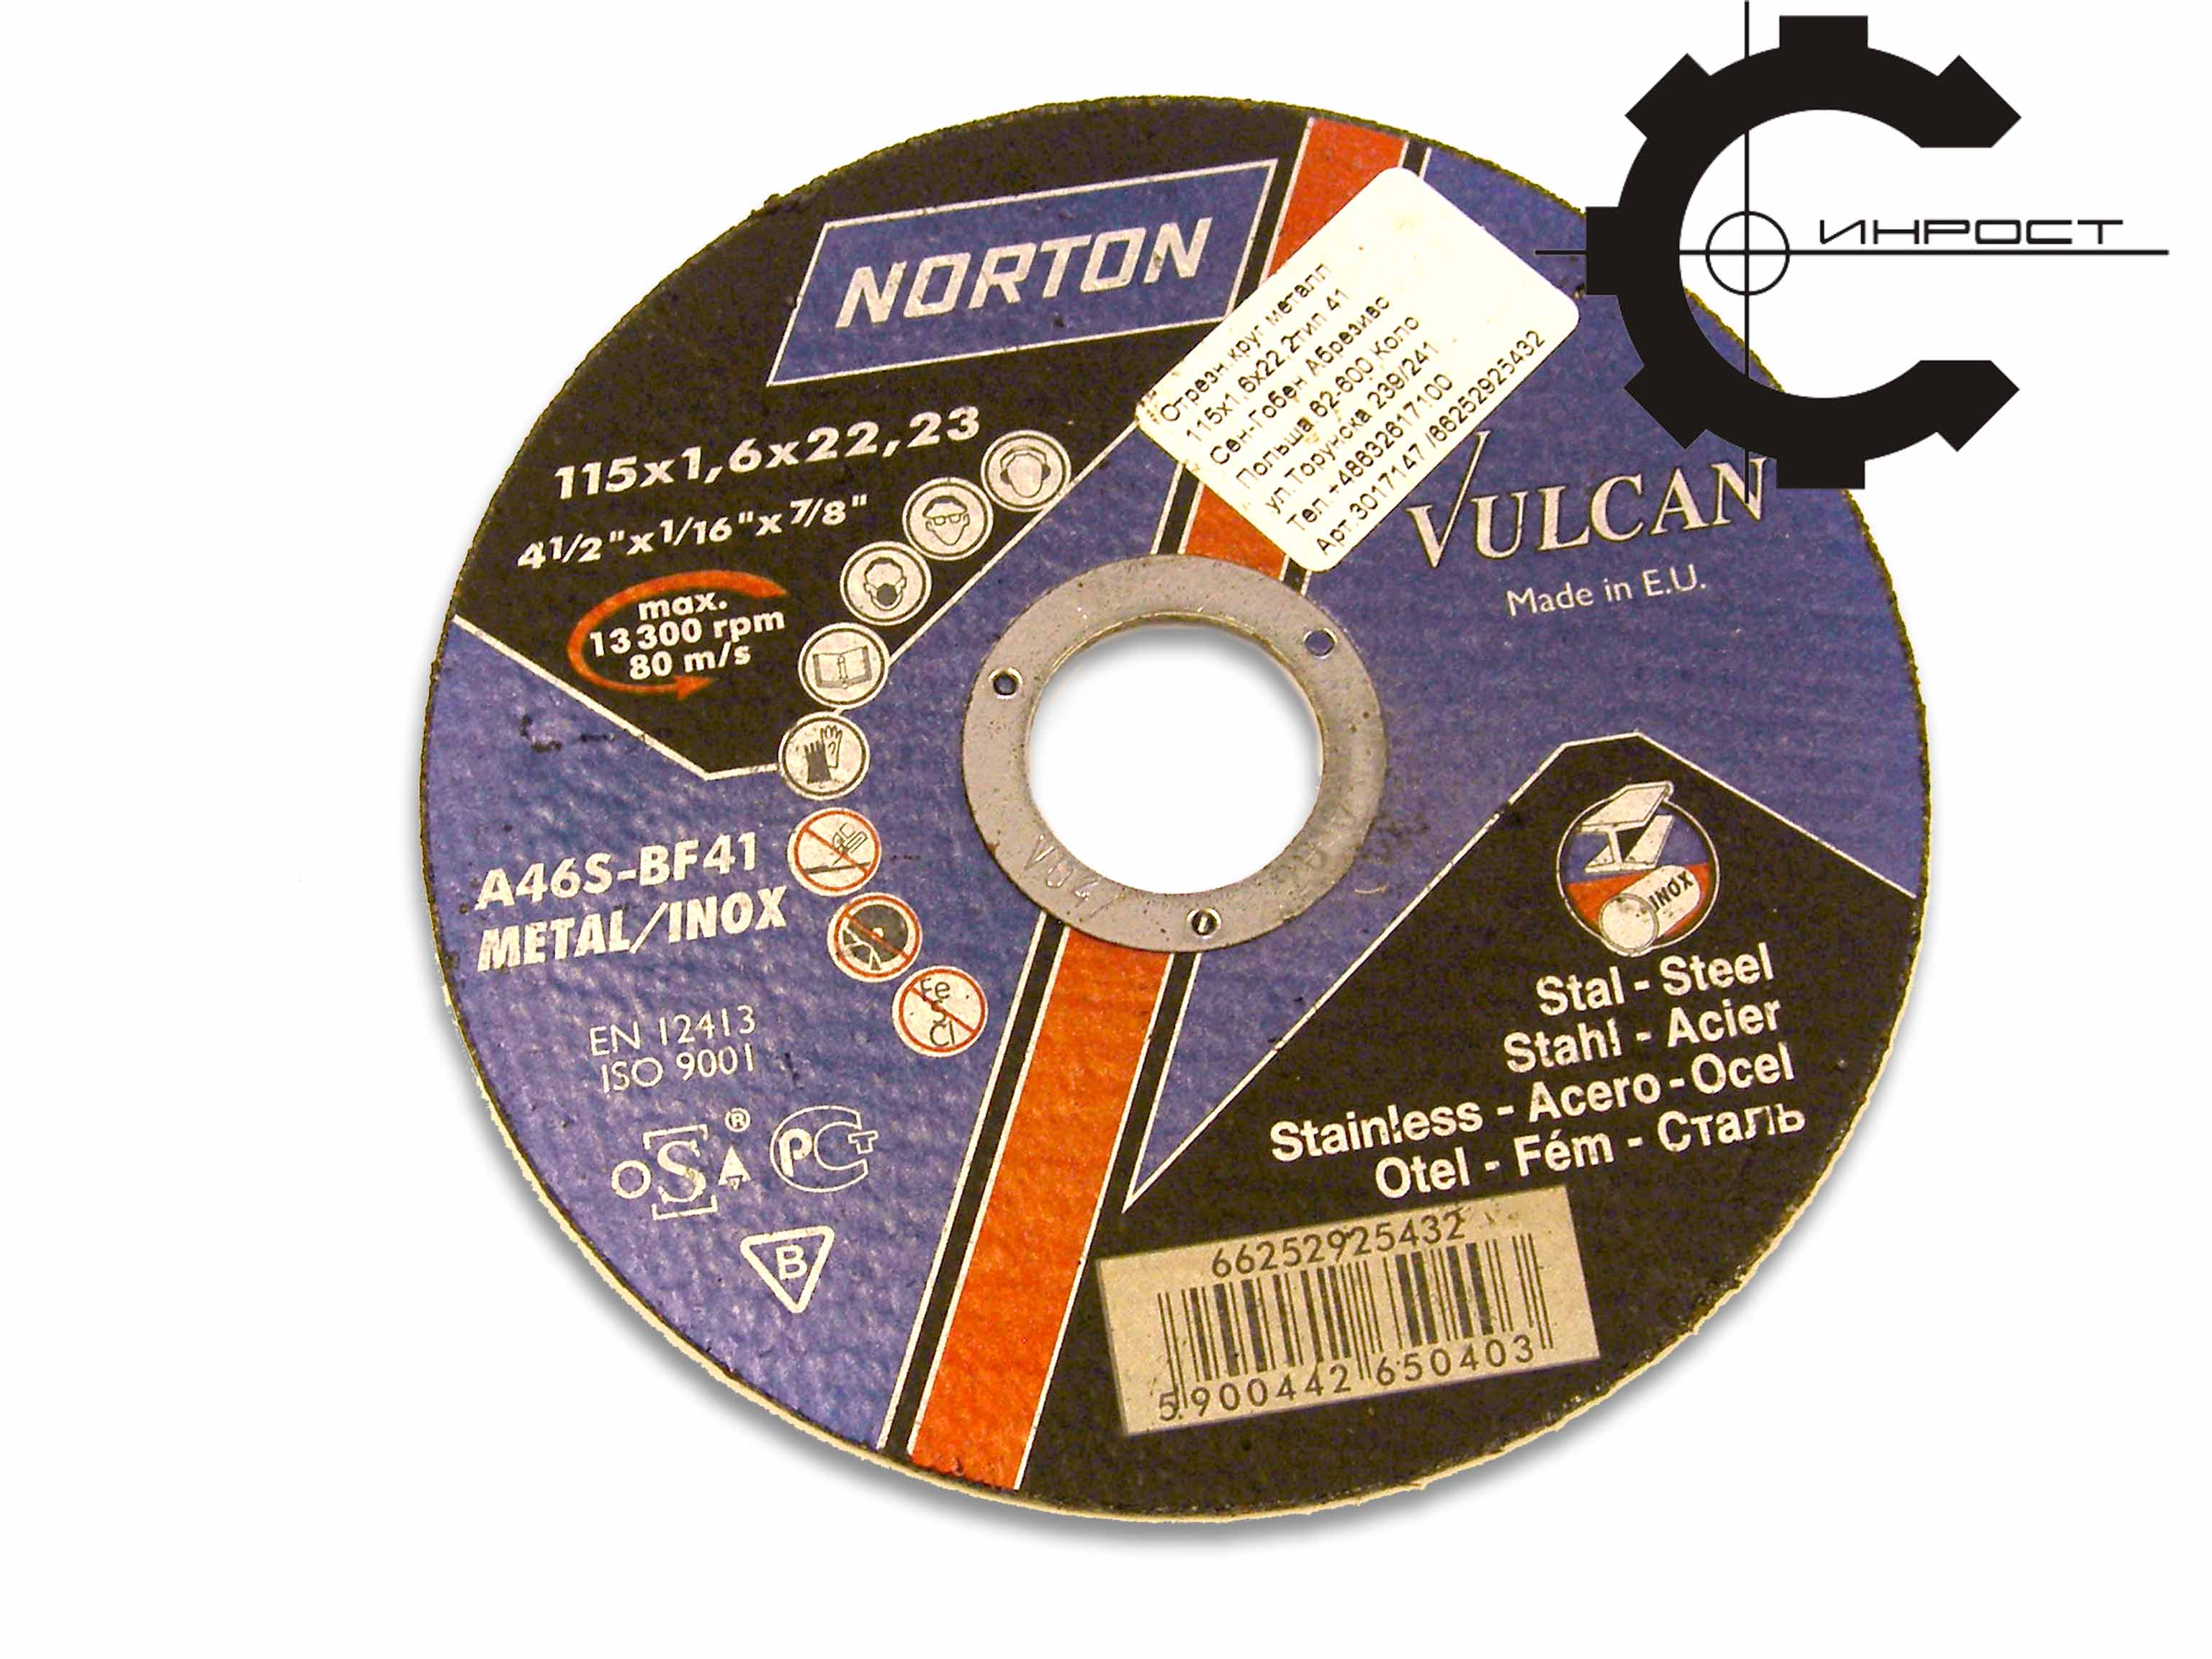      1151.622.2  41 (Norton-Vulcan)